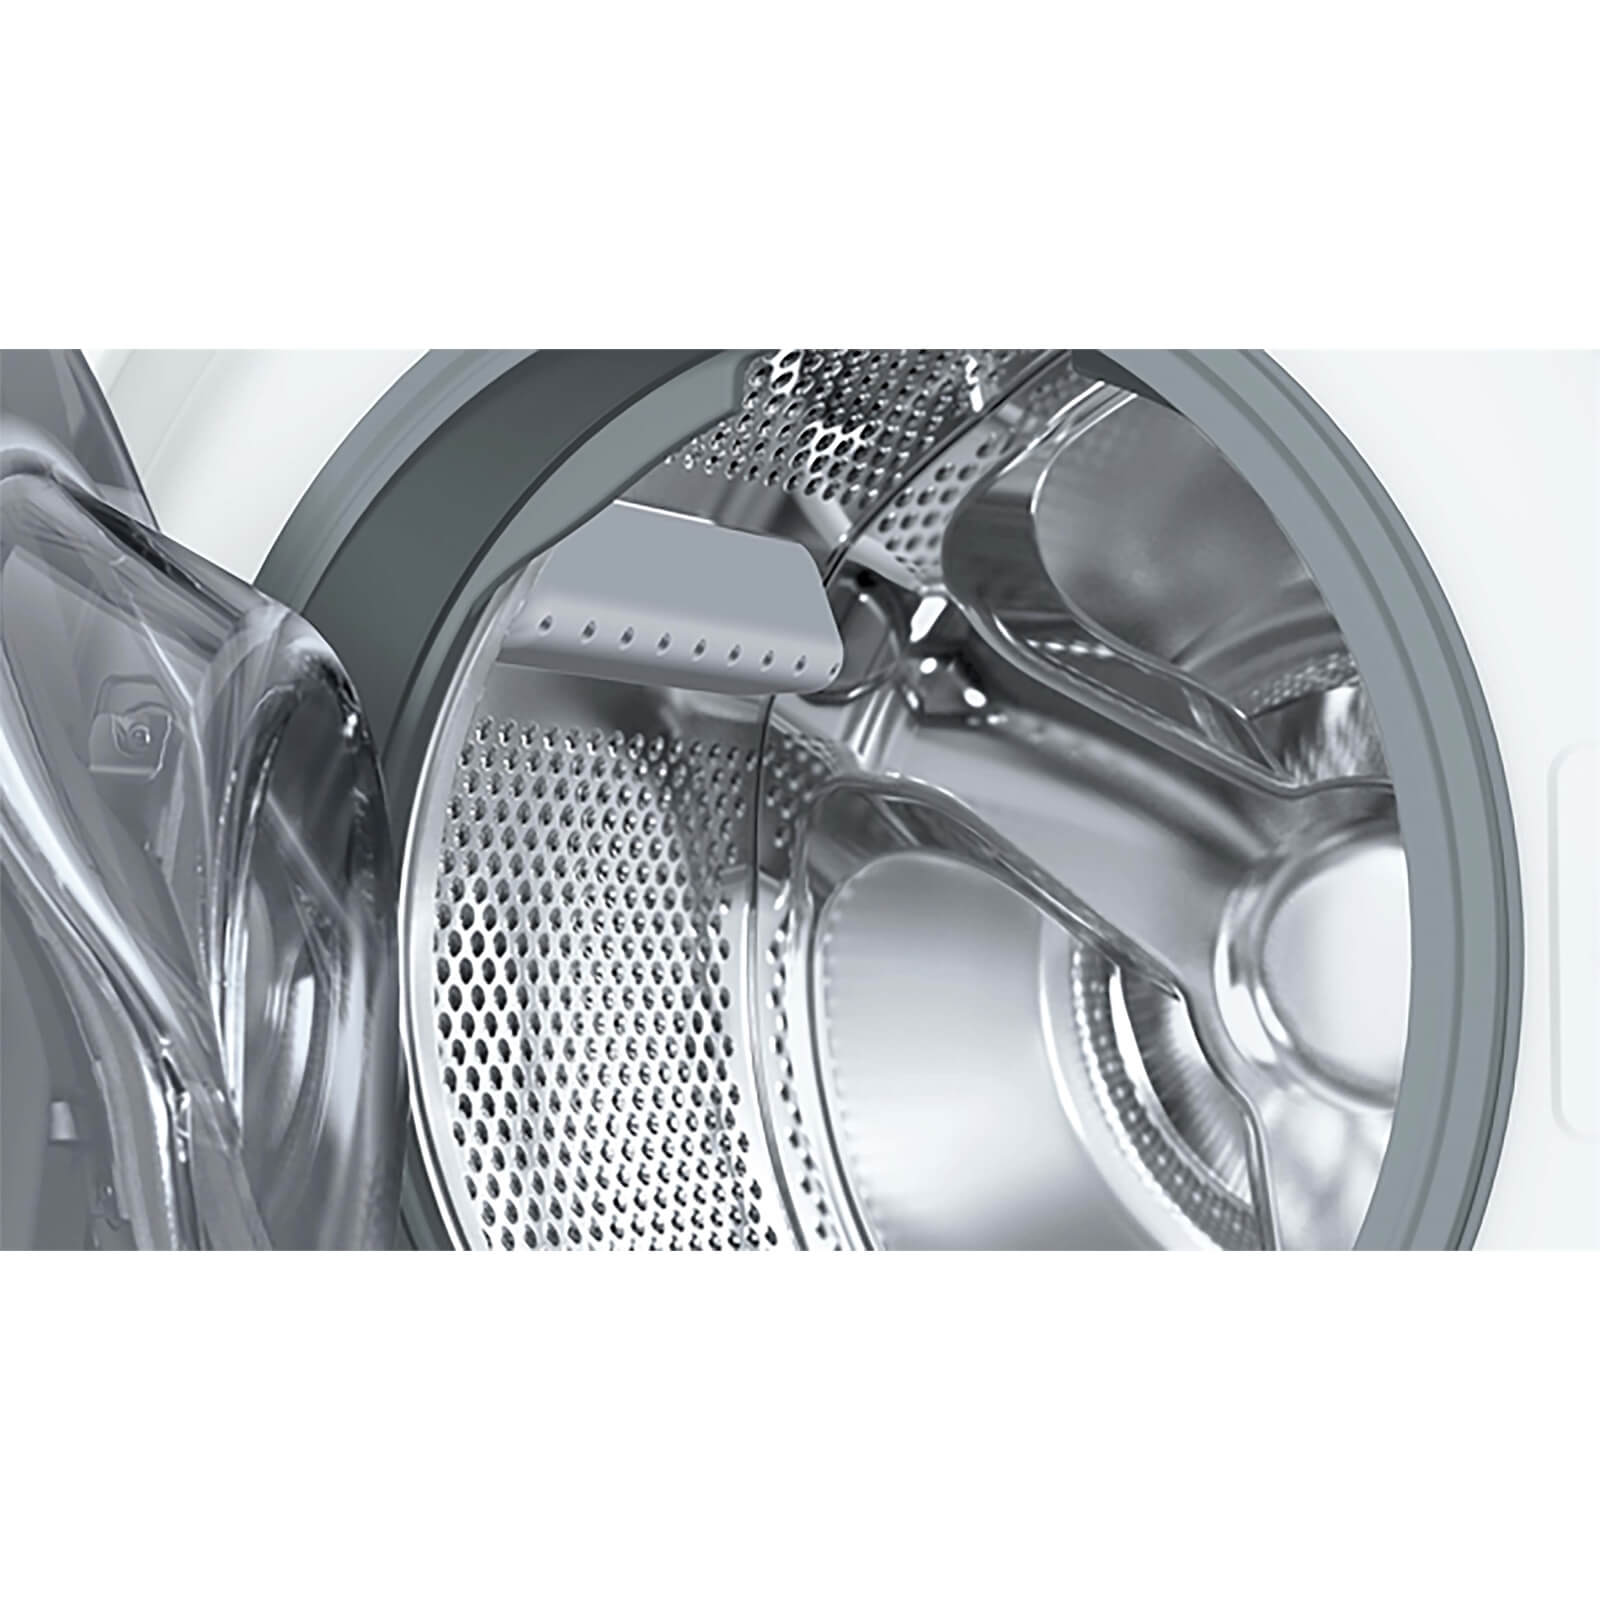 Bosch WKD28351GB Integrated Washer Dryer